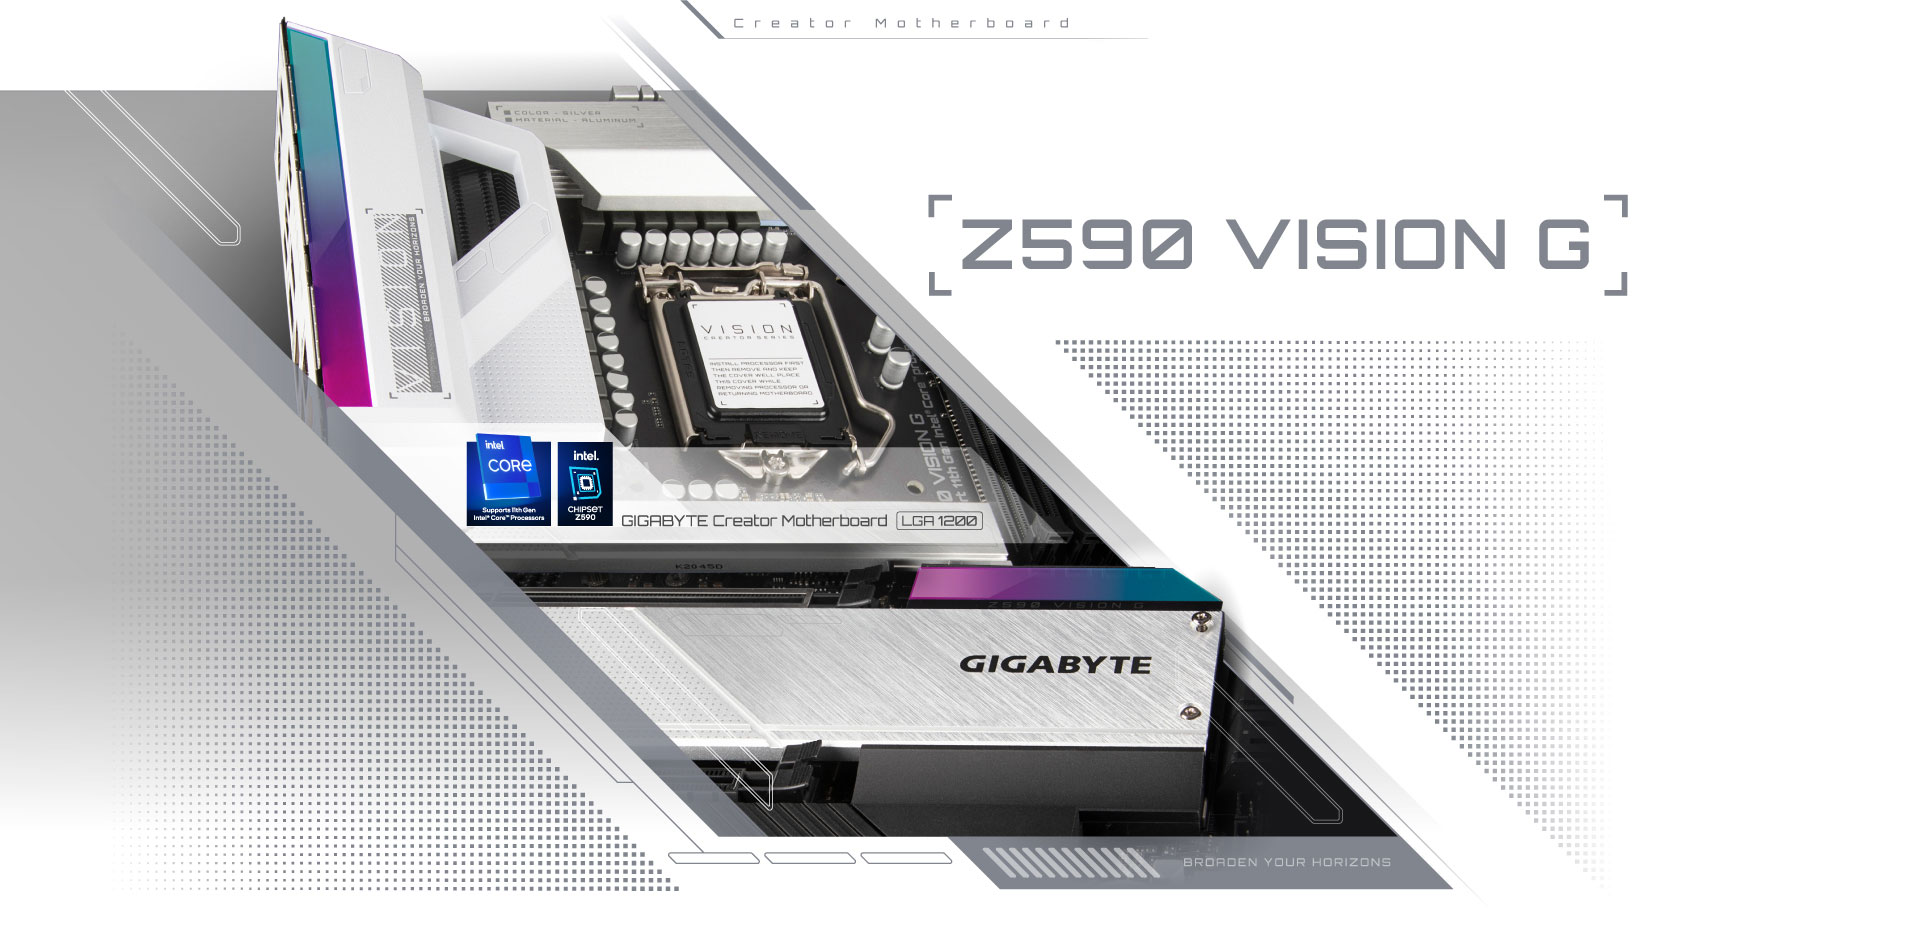 Gigabyte Z590 Vision G Review - Z590 Vision G Motherboard Review